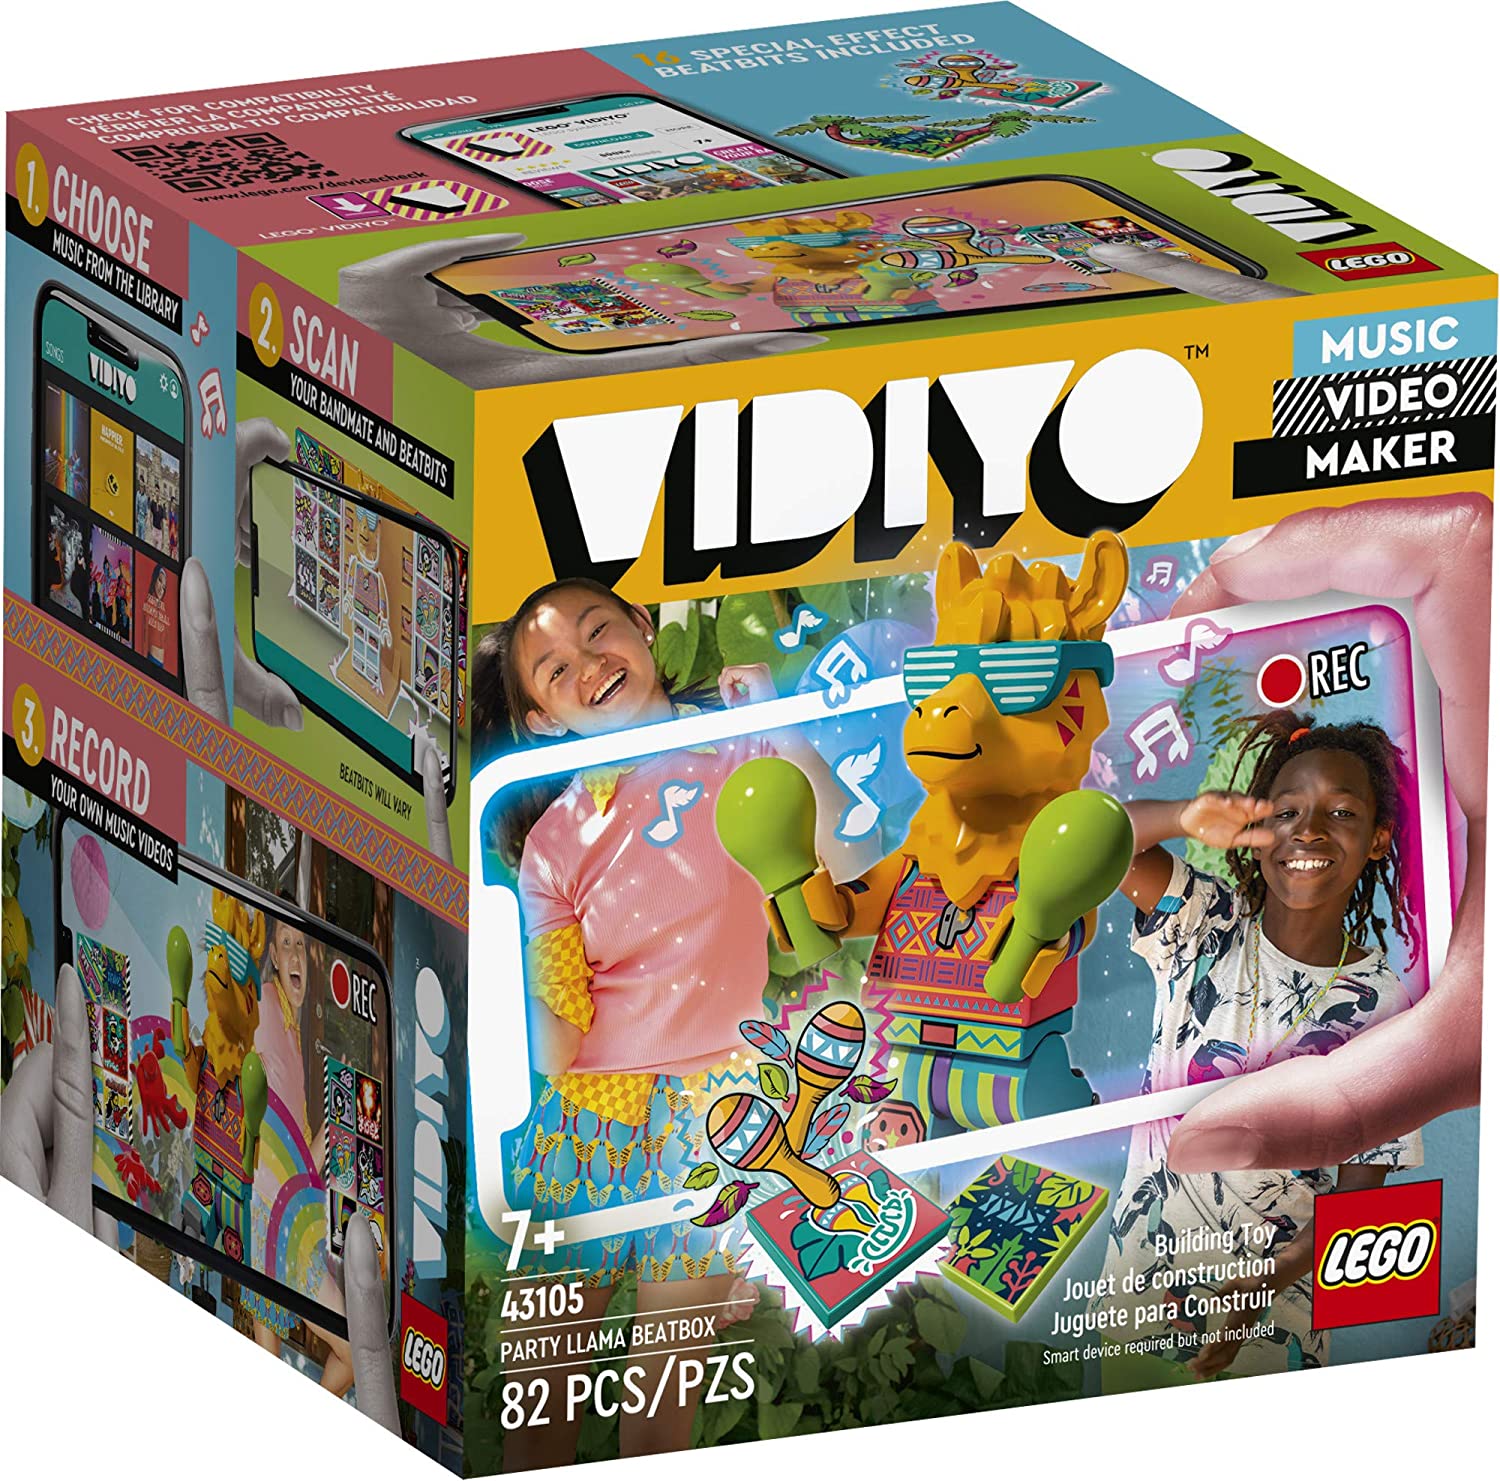 LEGO® VIDIYO Party Llama Beatbox 43105 Building Kit with Minifigure, New 2021 (82 Pieces)